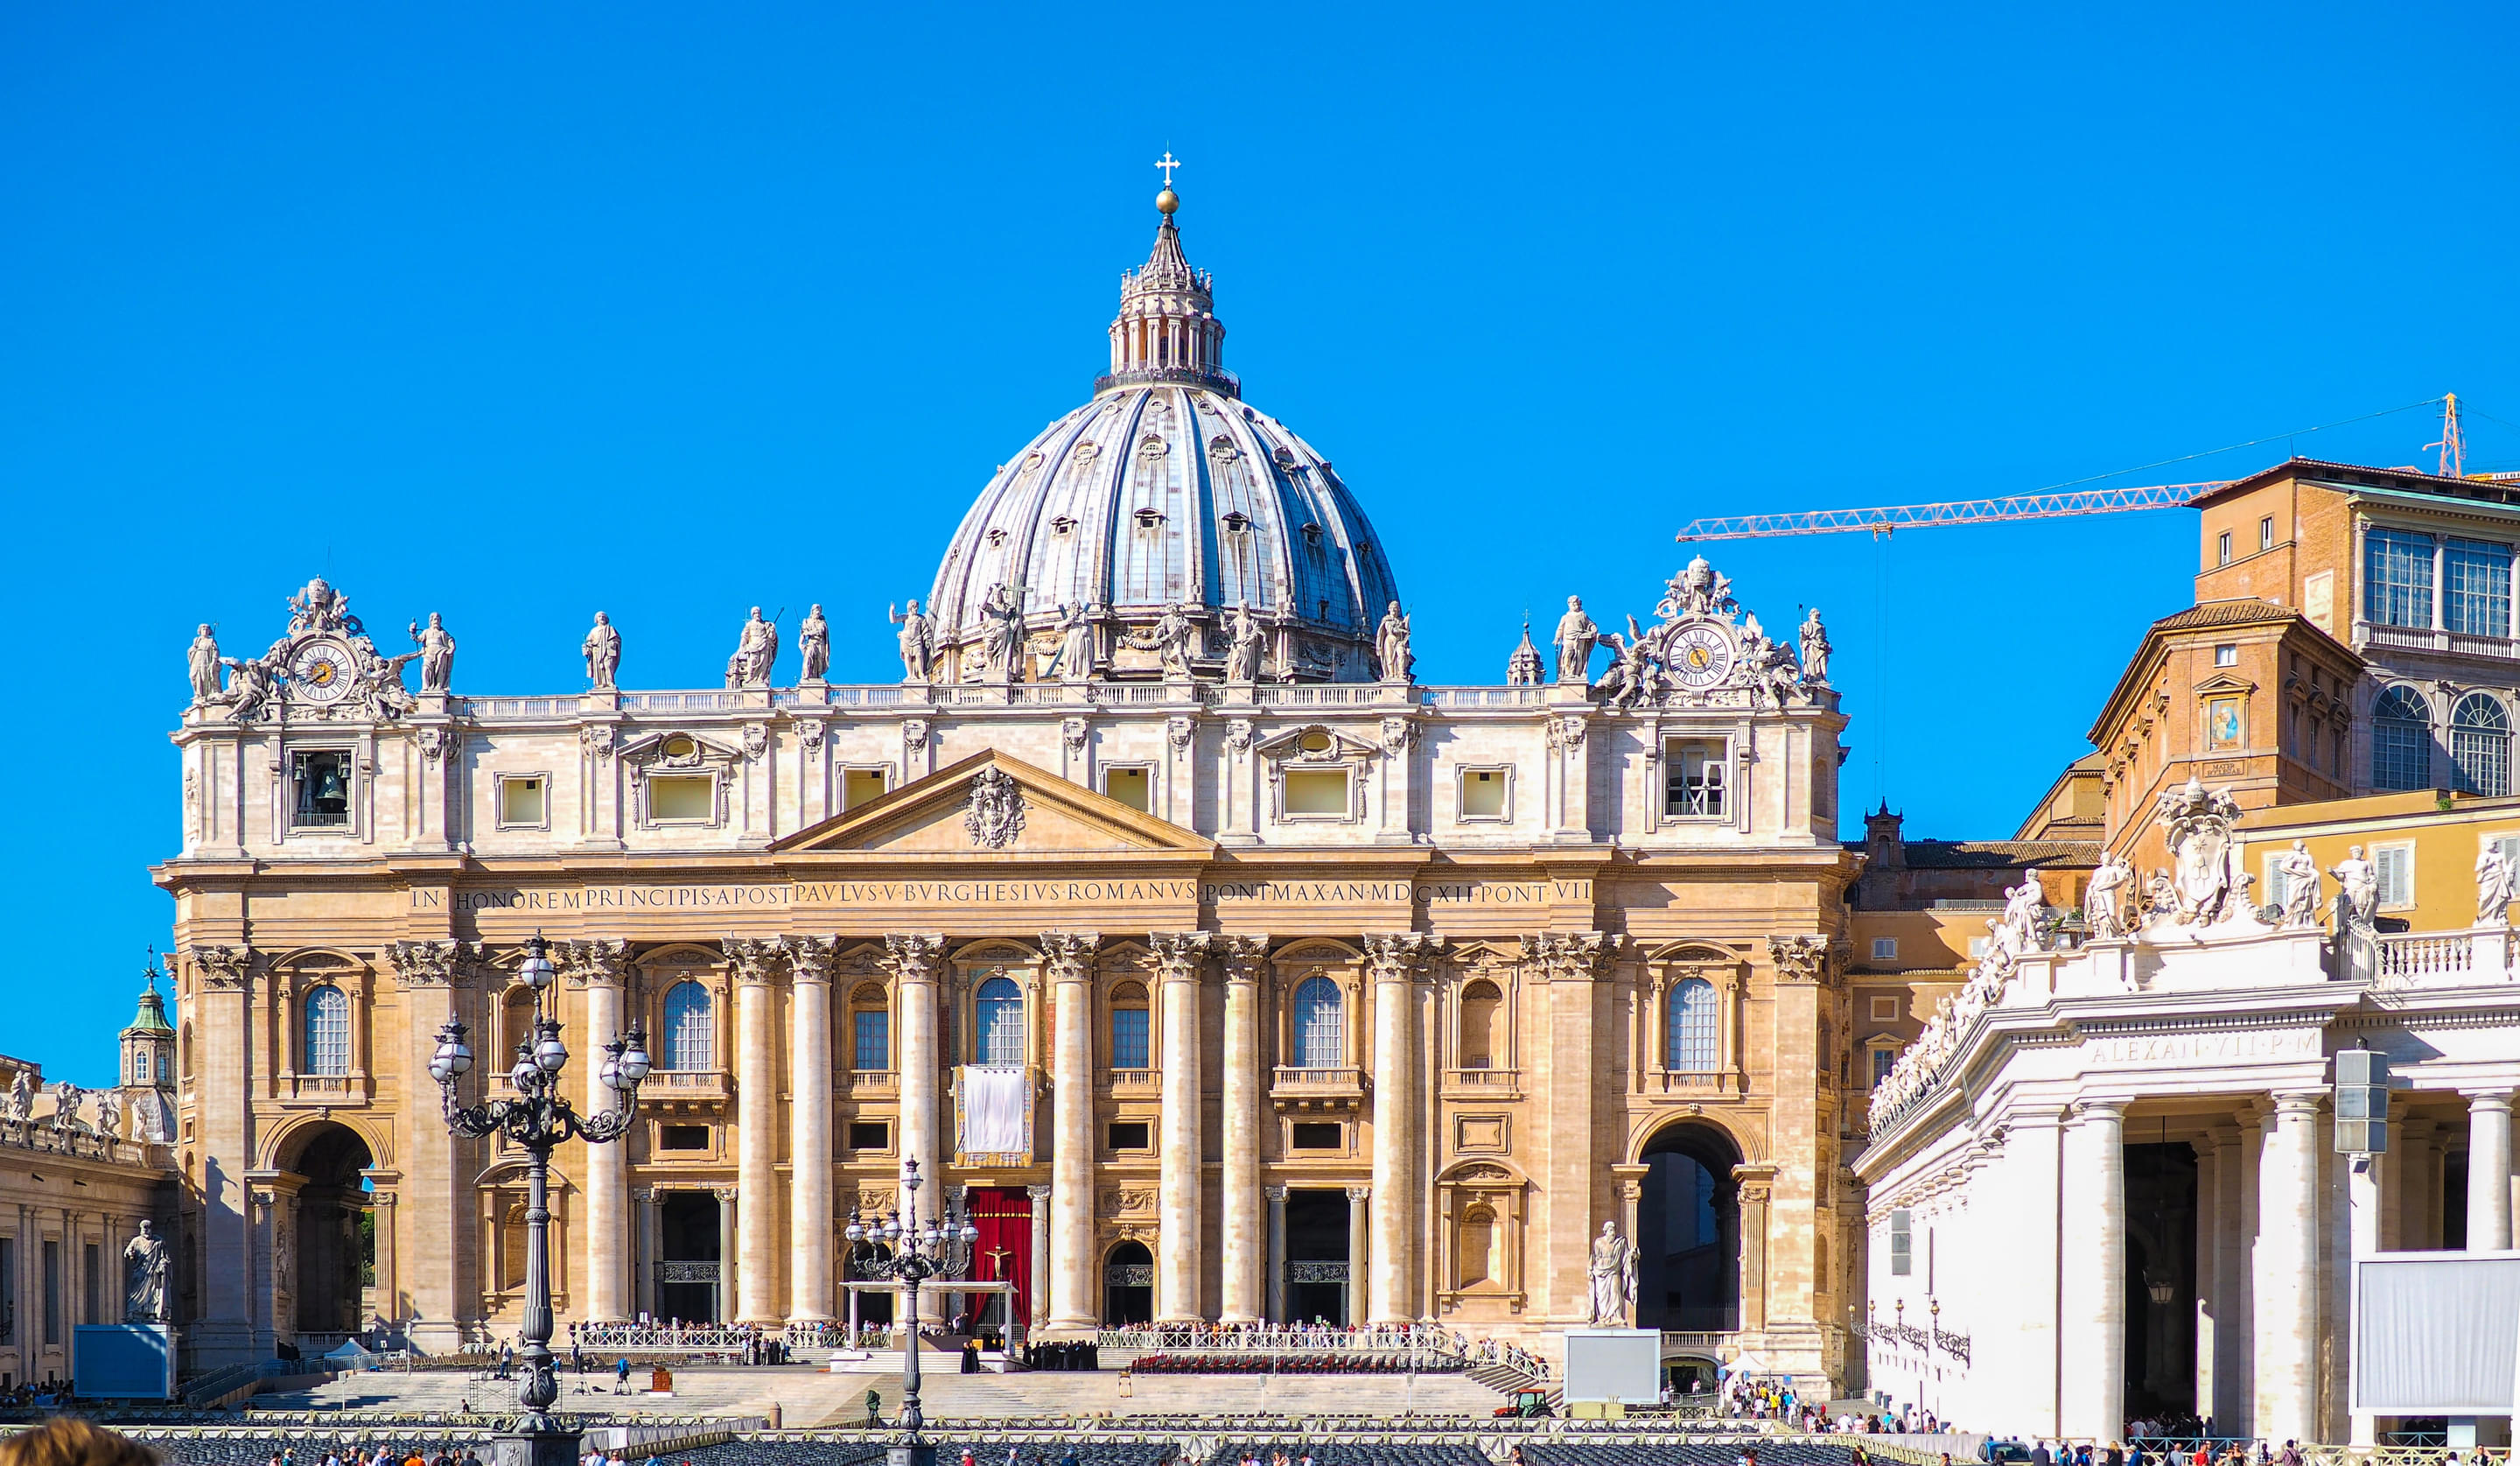 Vatican Museums Overview